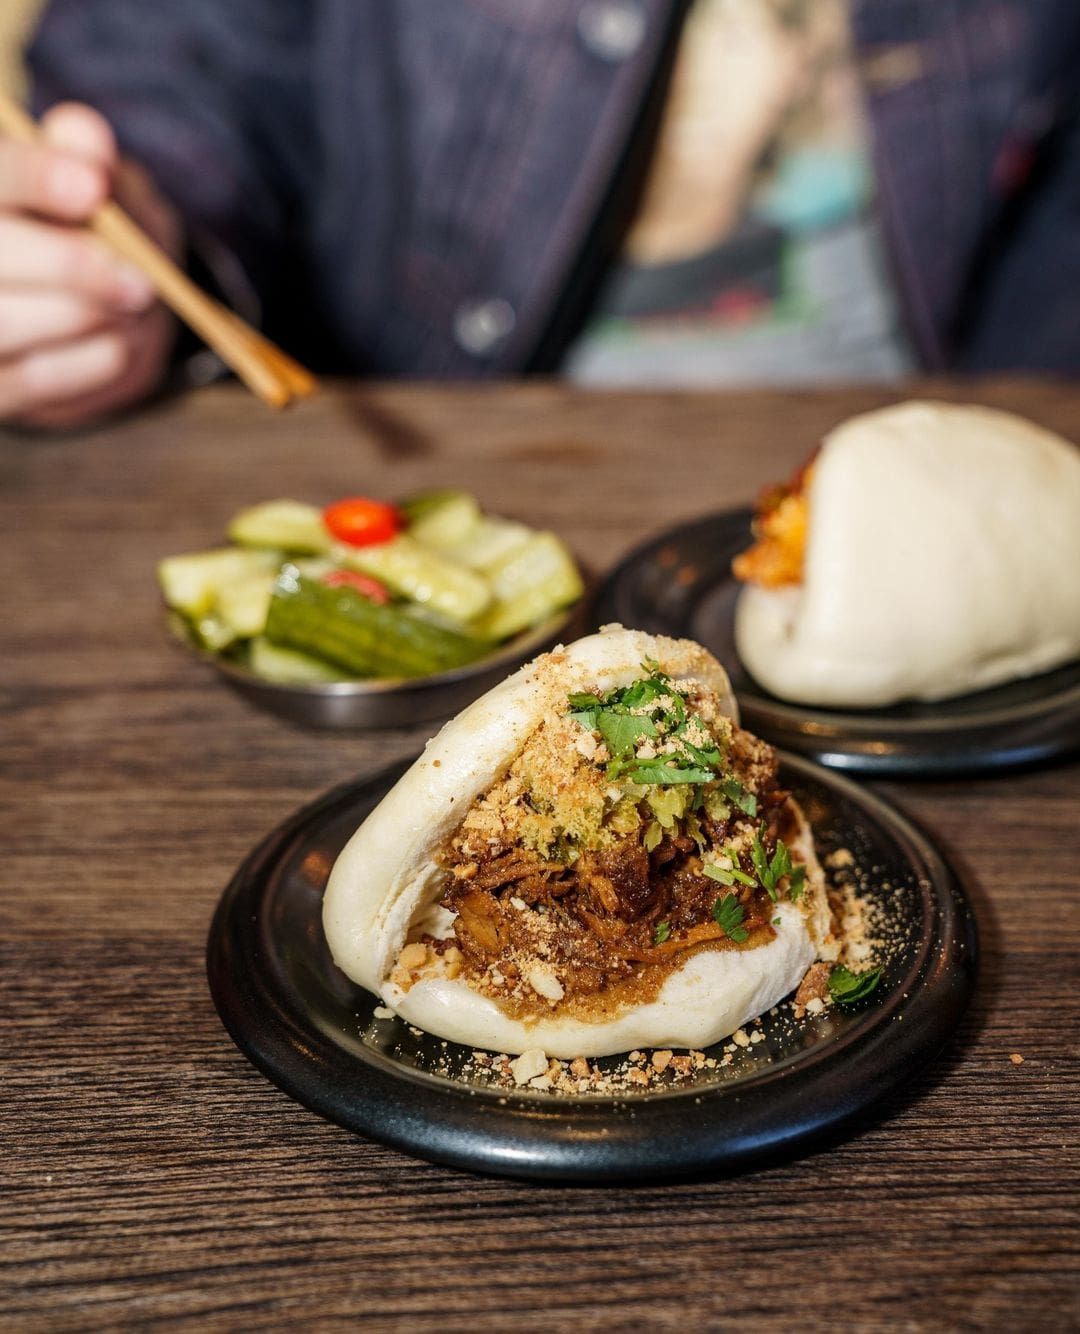 The best restaurants in Peckham | a loaded bao bun at Mr Bao